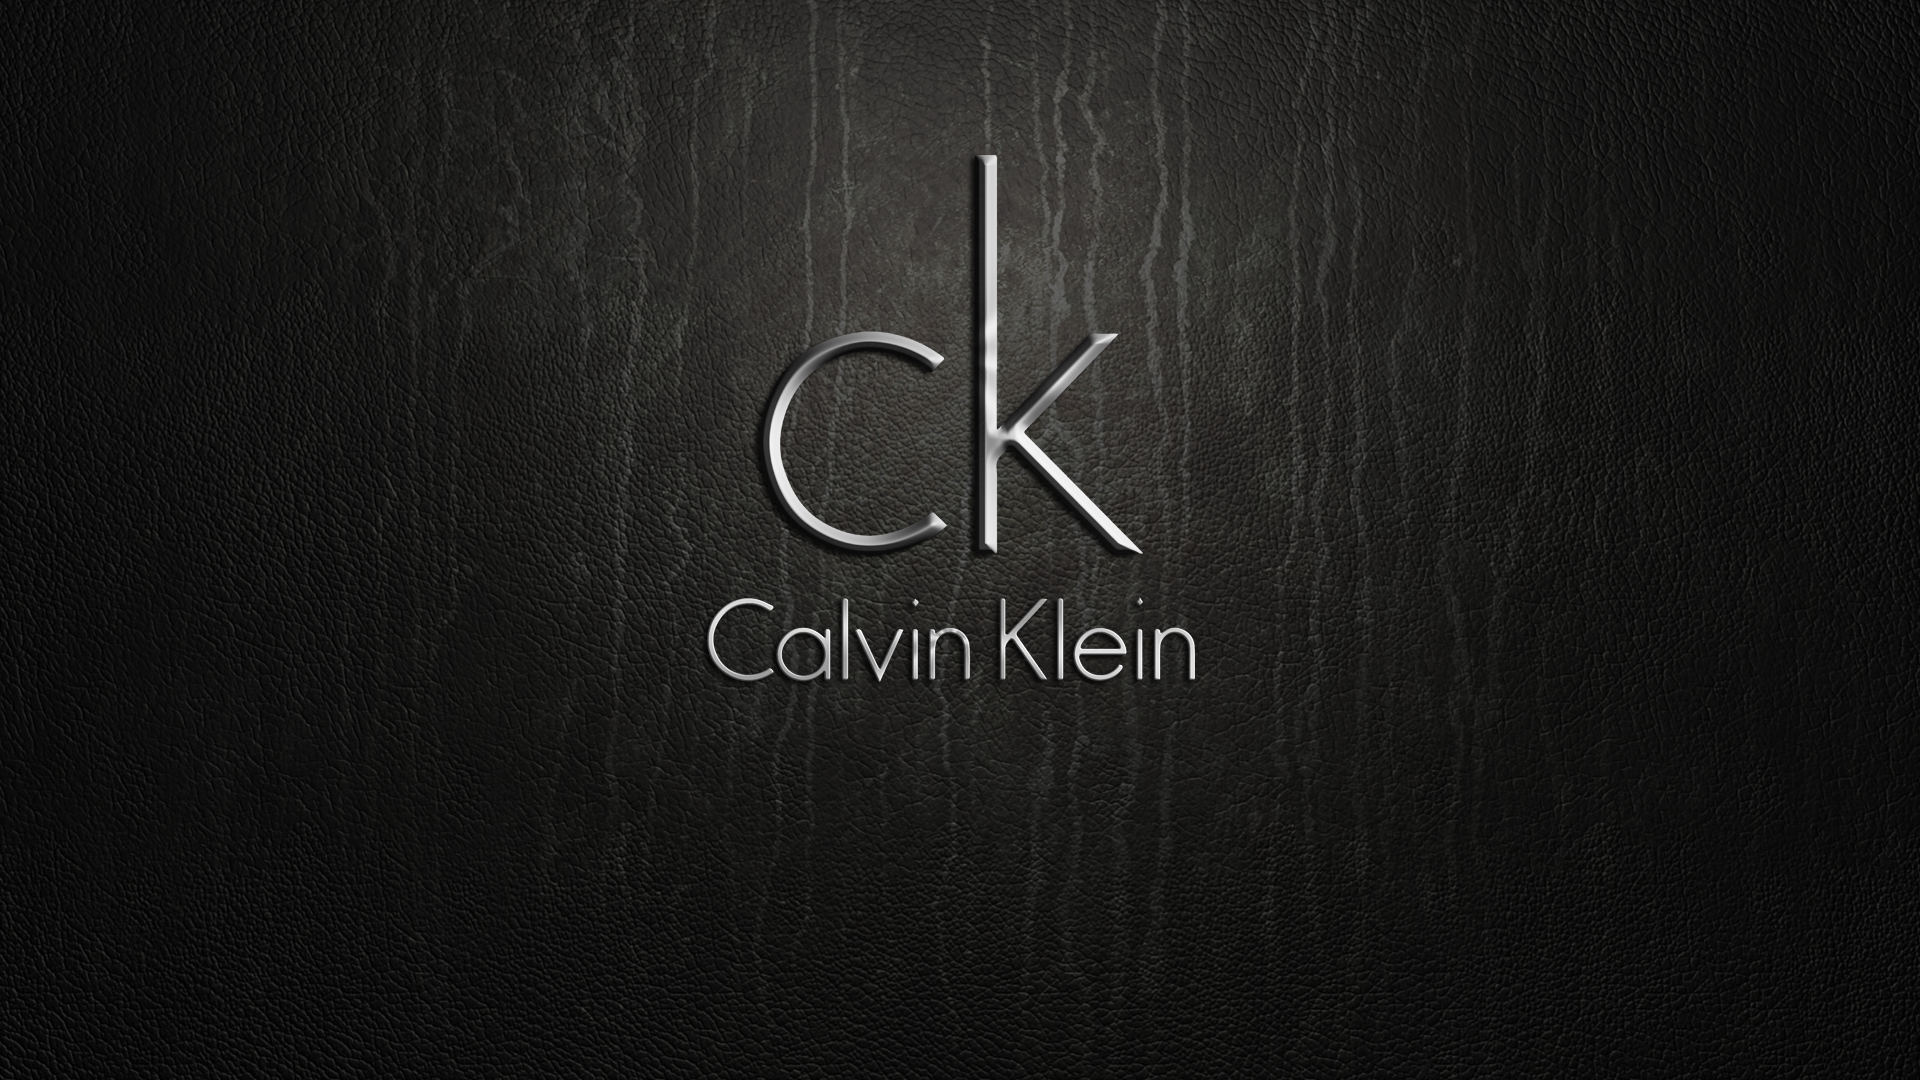 Calvin Klein HD Wallpaper Background Image Id